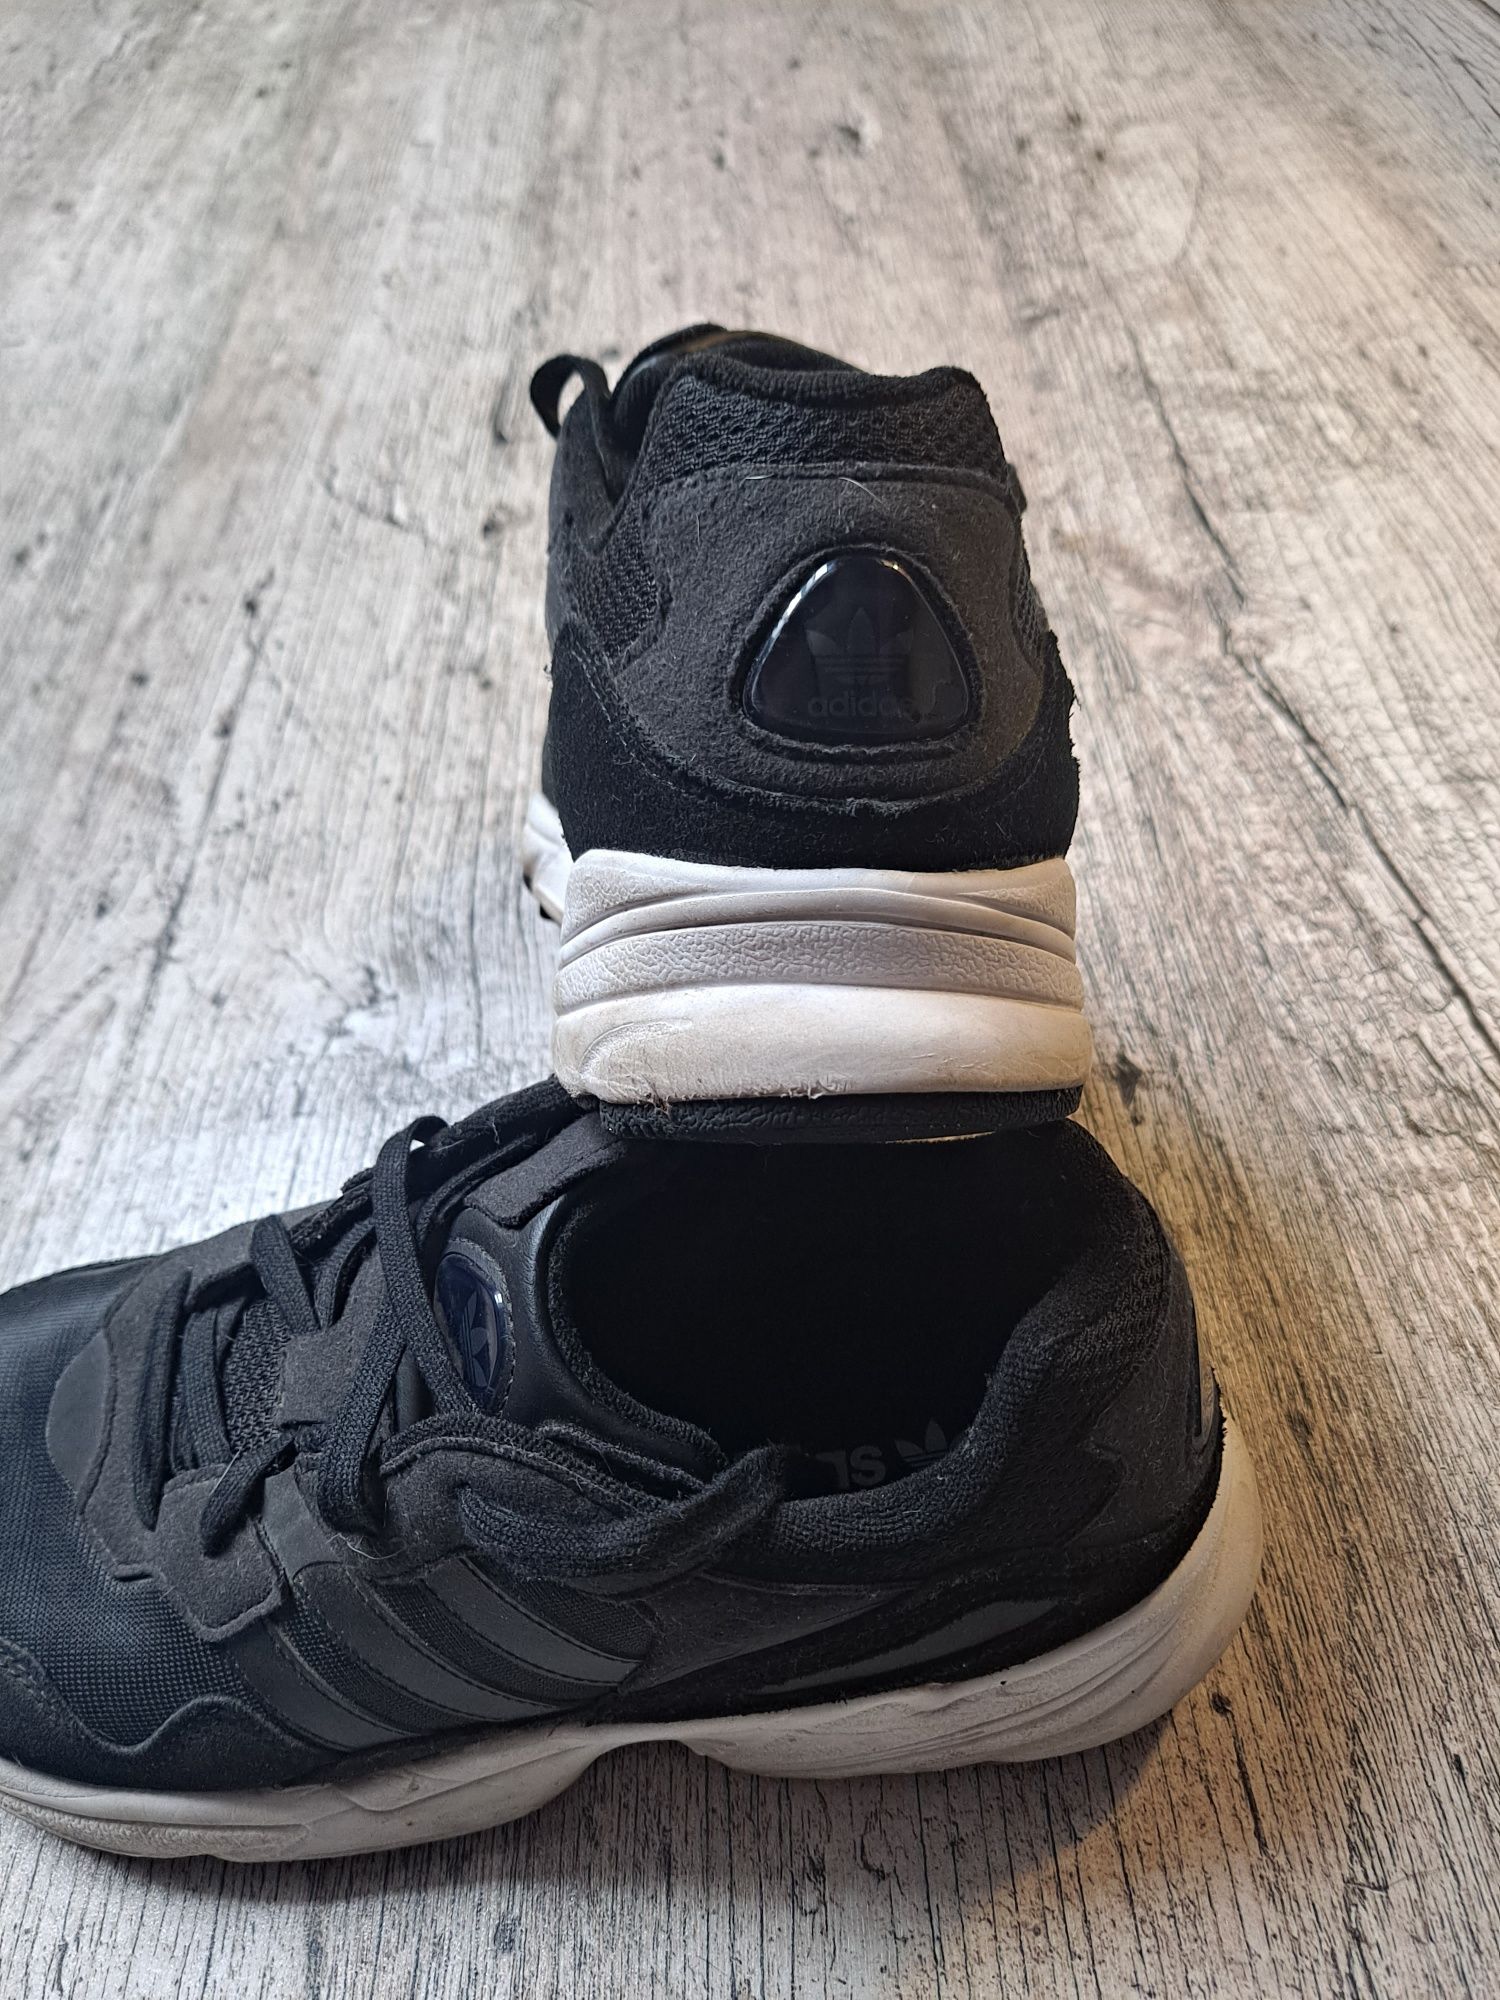 Adidas yung-96 black/white